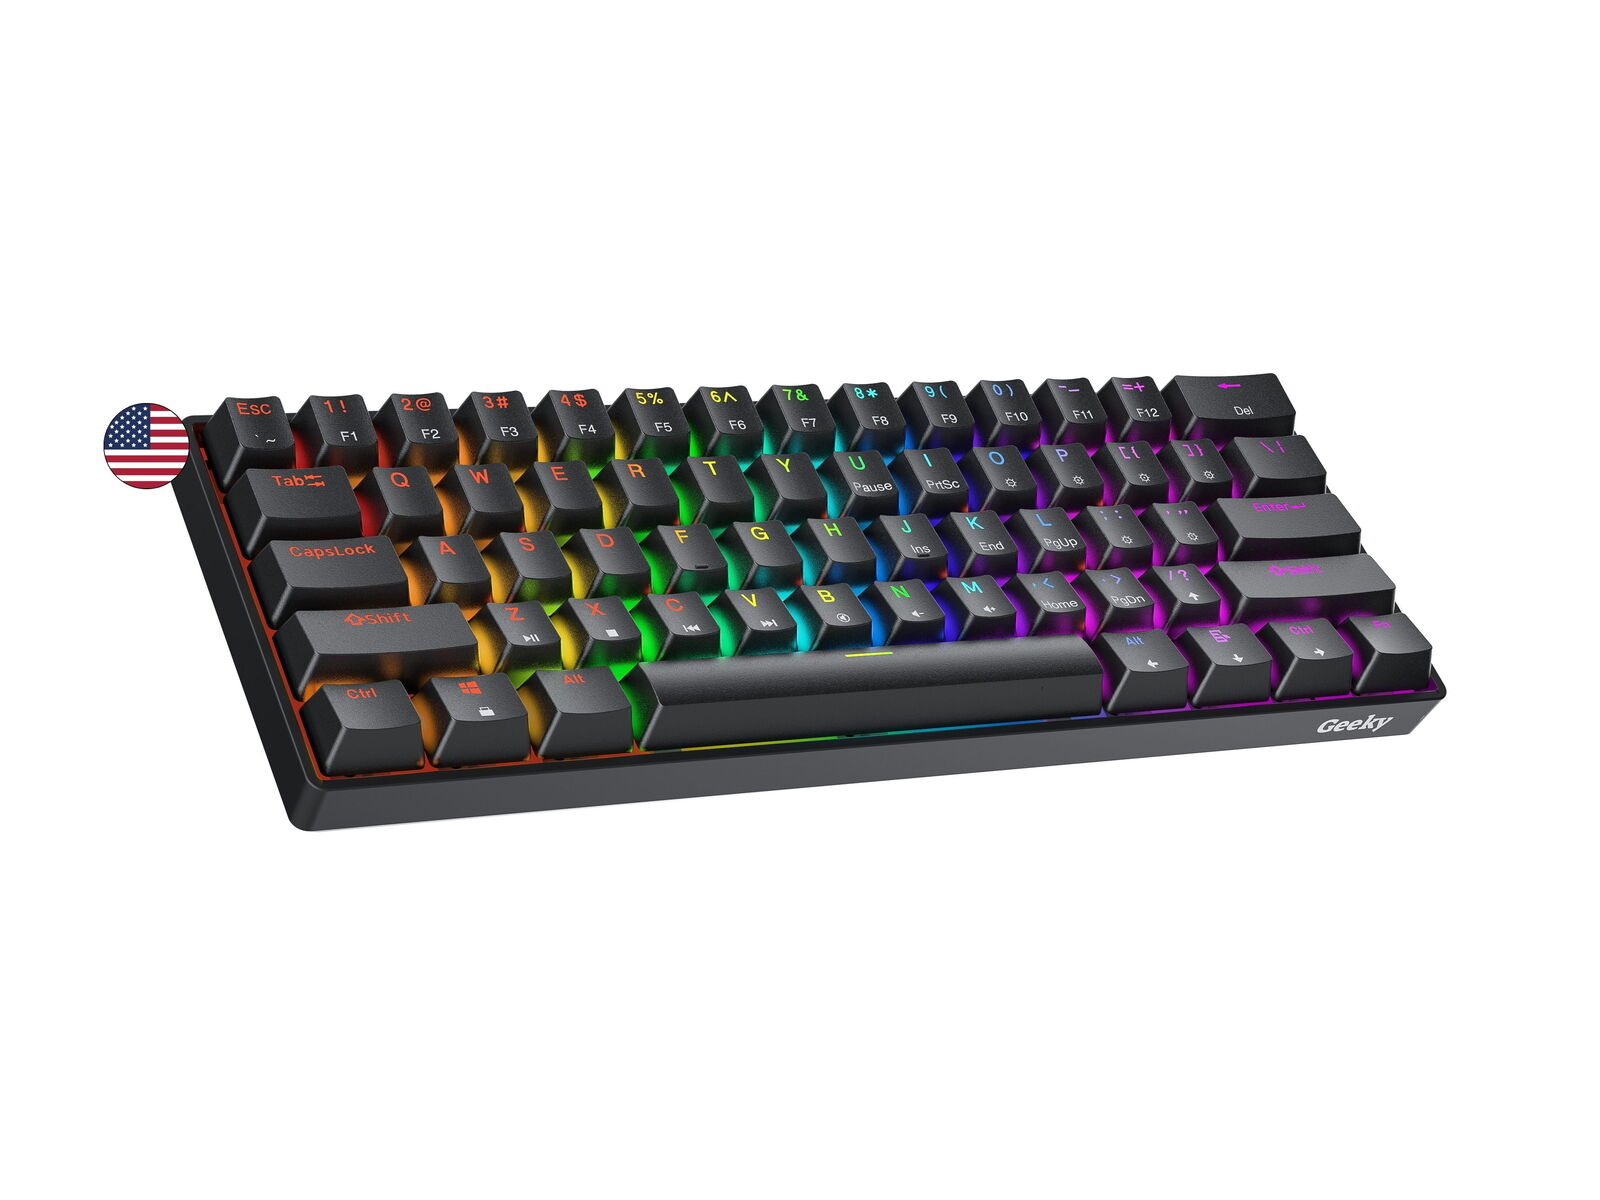 Geeky GK61 SE 60% | Mechanical Gaming Keyboard | 61 Keys RGB LED Backlit